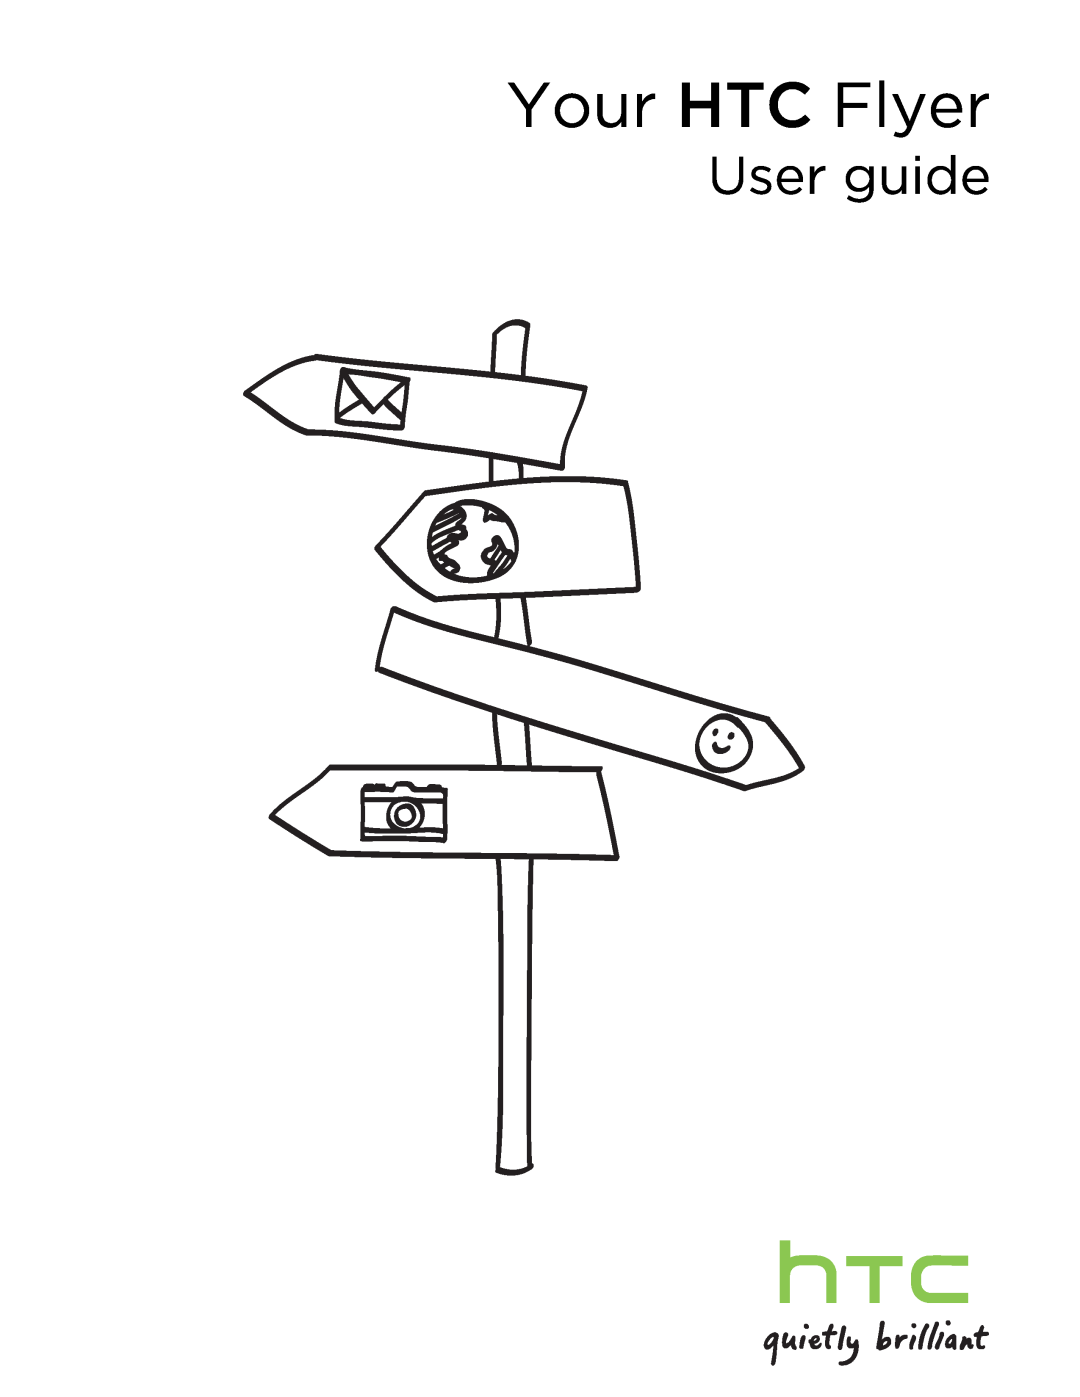 HTC HTCFlyerP512 manual Your HTC Flyer, User guide 